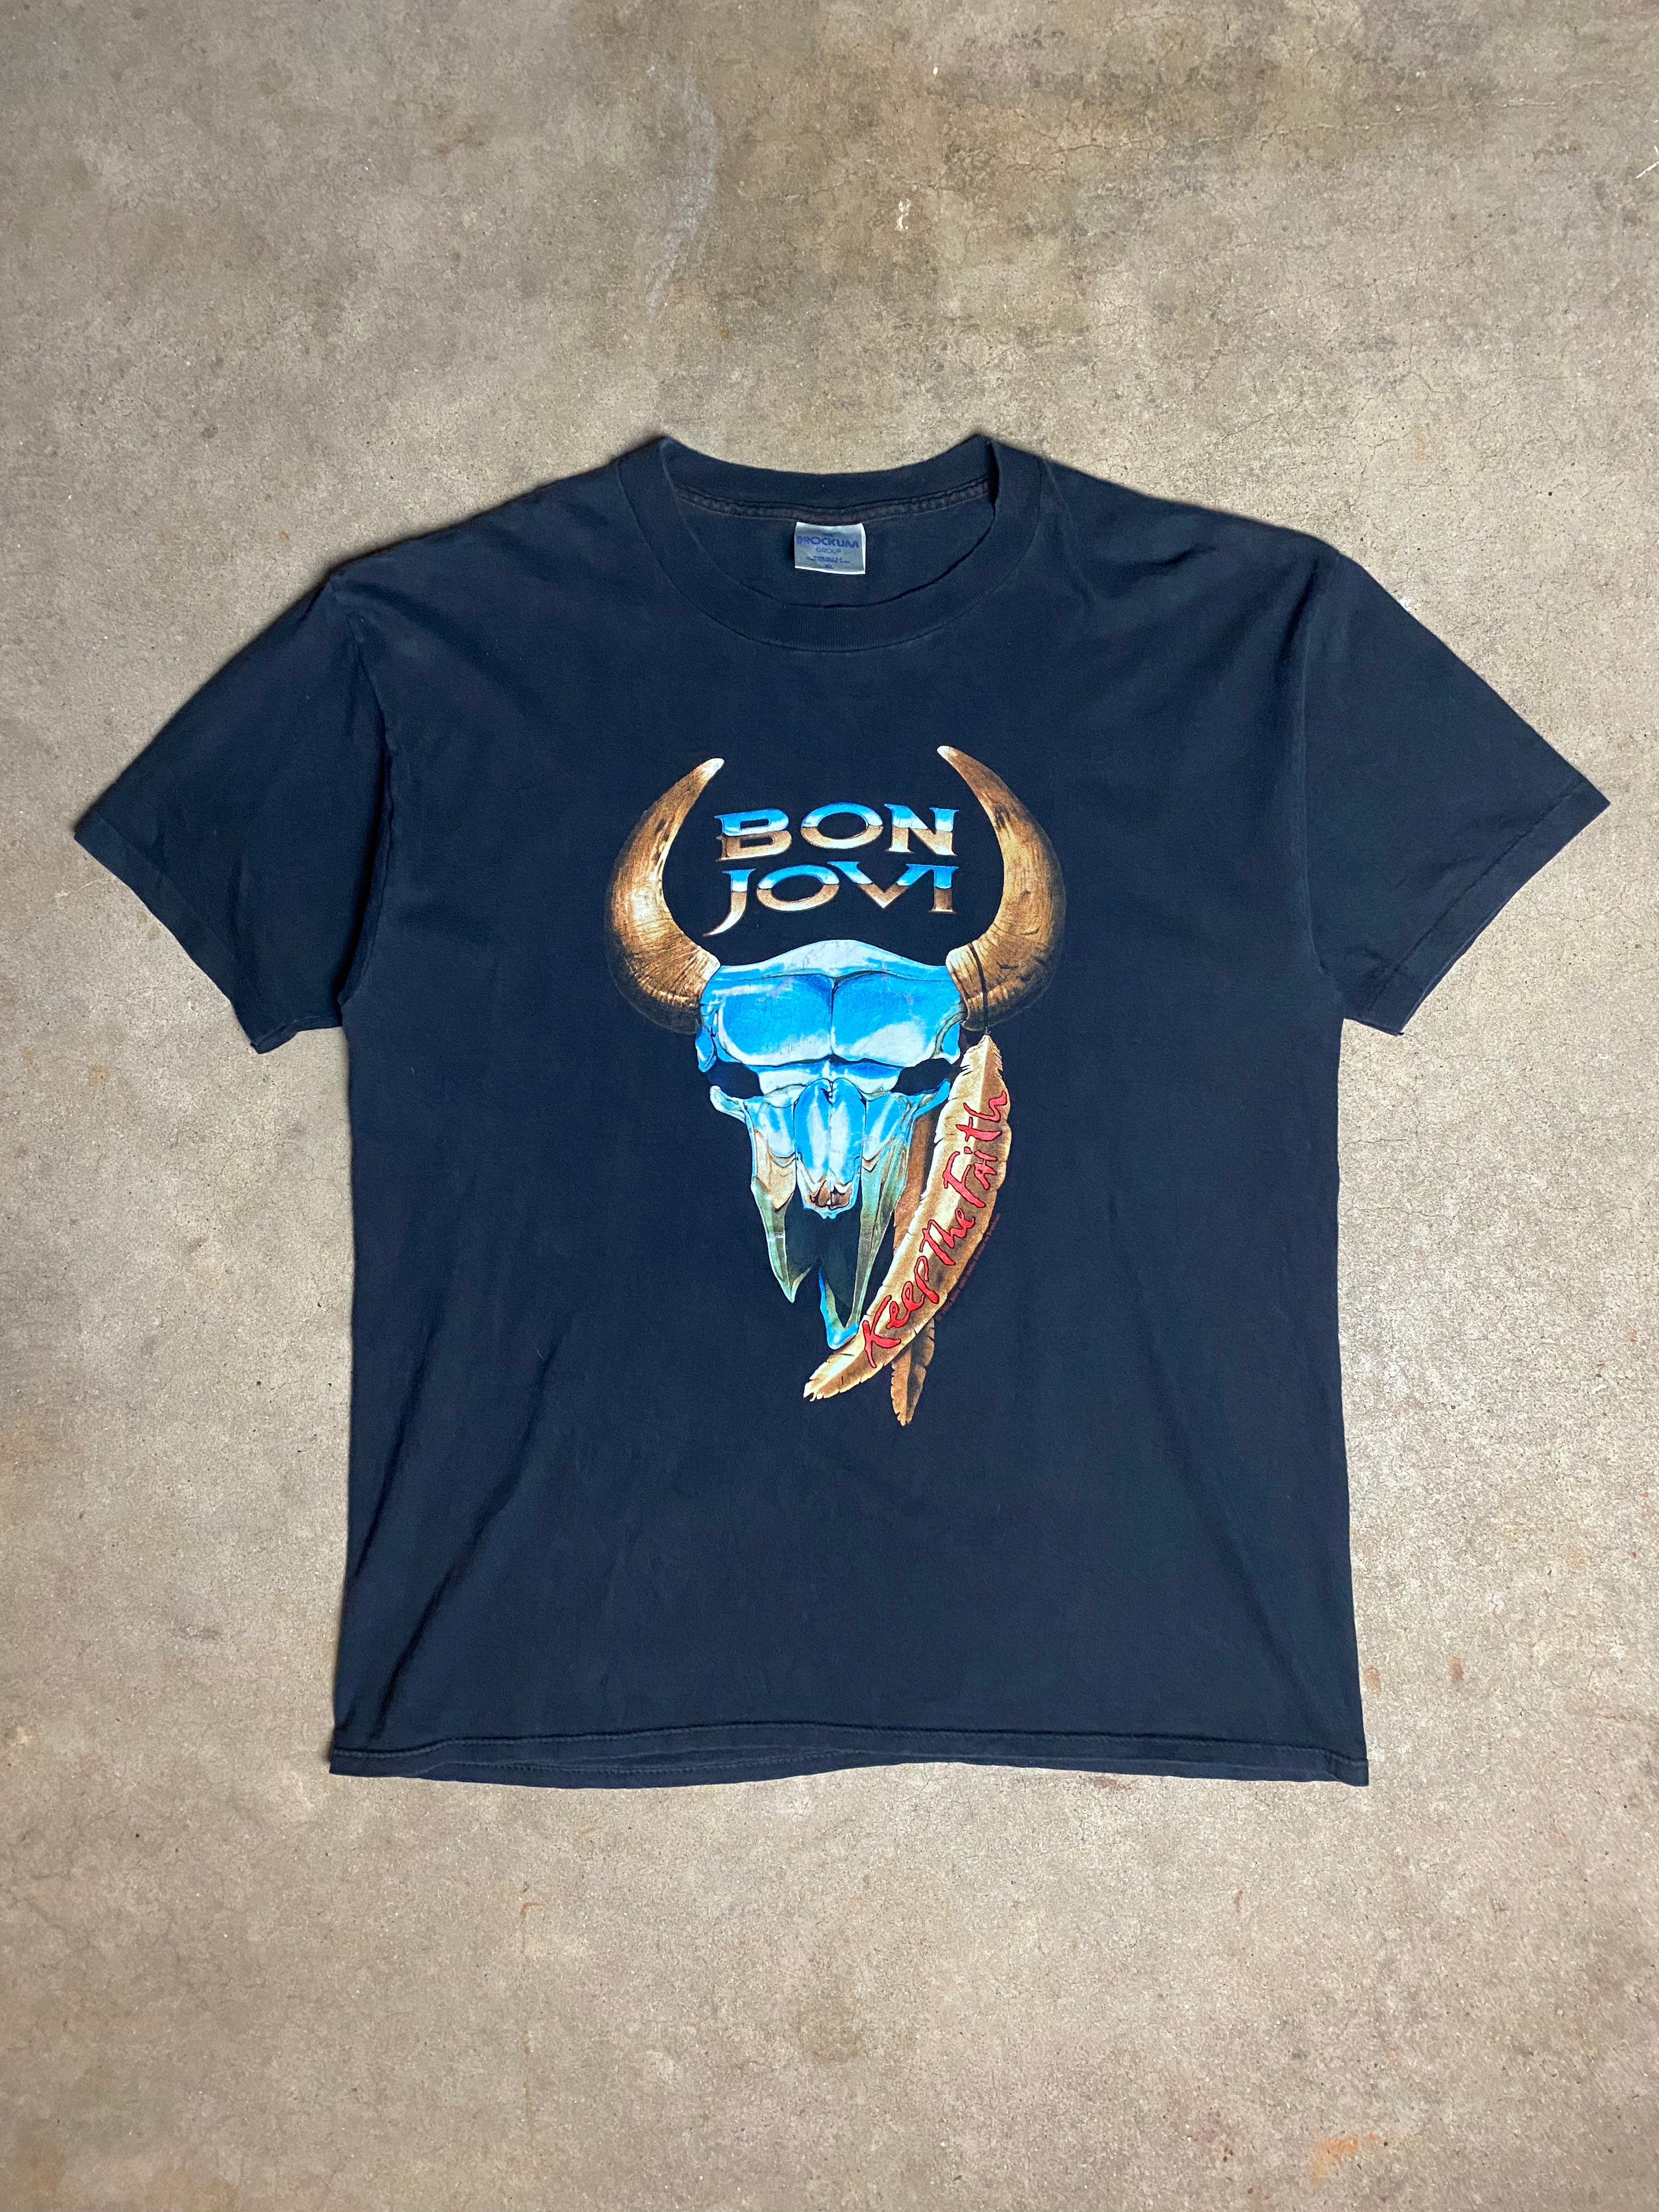 1993 Bon Jovi Keep the Faith Tour T-Shirt (XL)